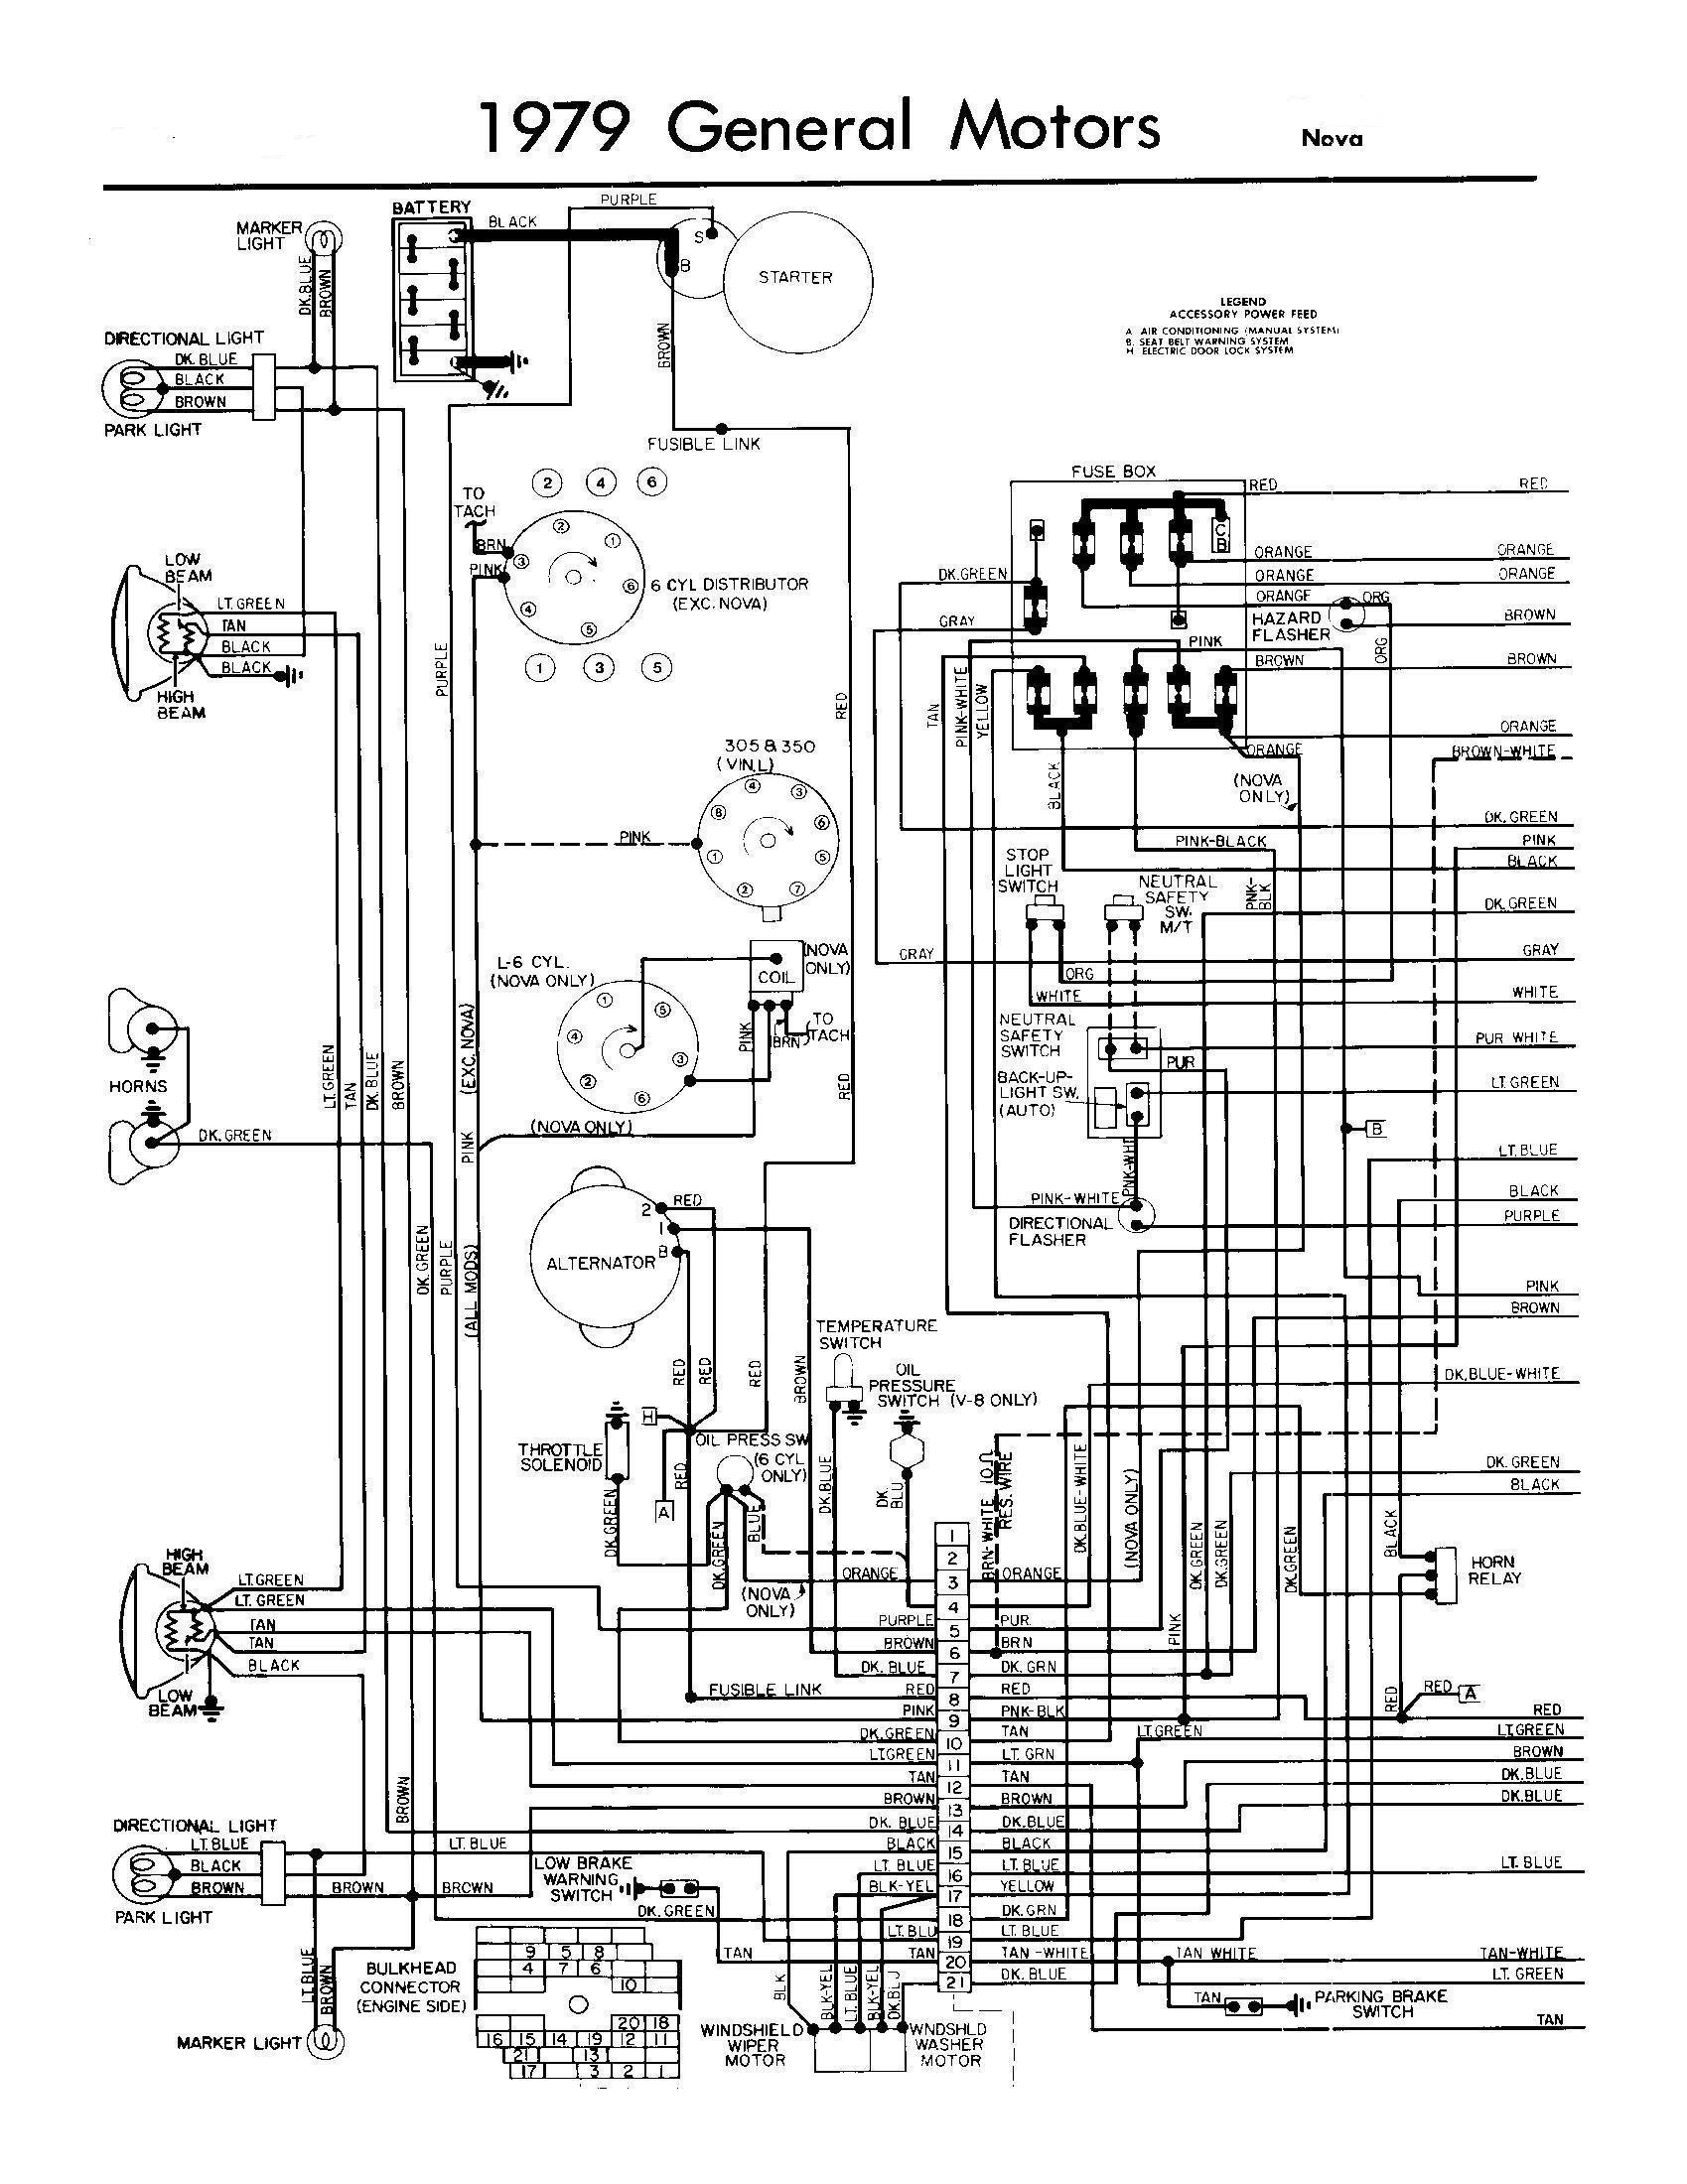 Engine Wiring Diagram 1986 Monte 305 Daihatsu Charade G100 Wiring Diagram Jensen Dvd Player Of Engine Wiring Diagram 1986 Monte 305